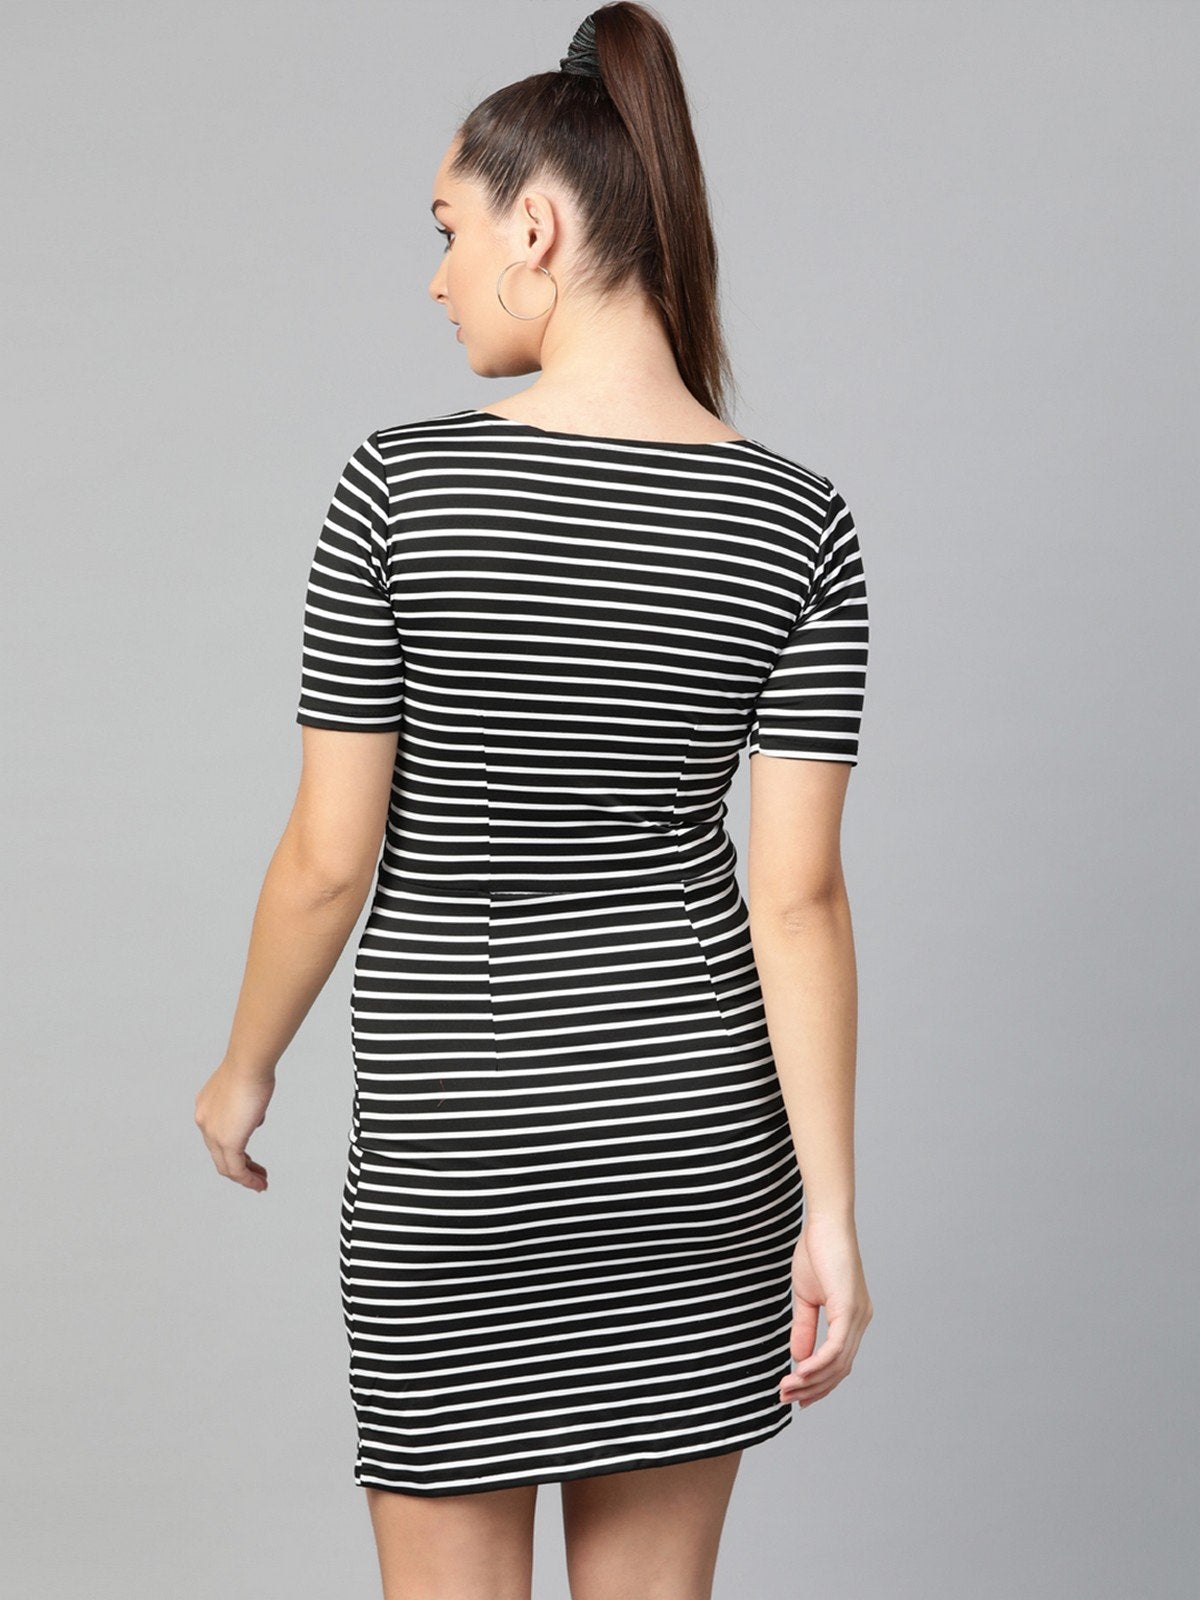 Women's Thick Stripe Plain Dress - Pannkh